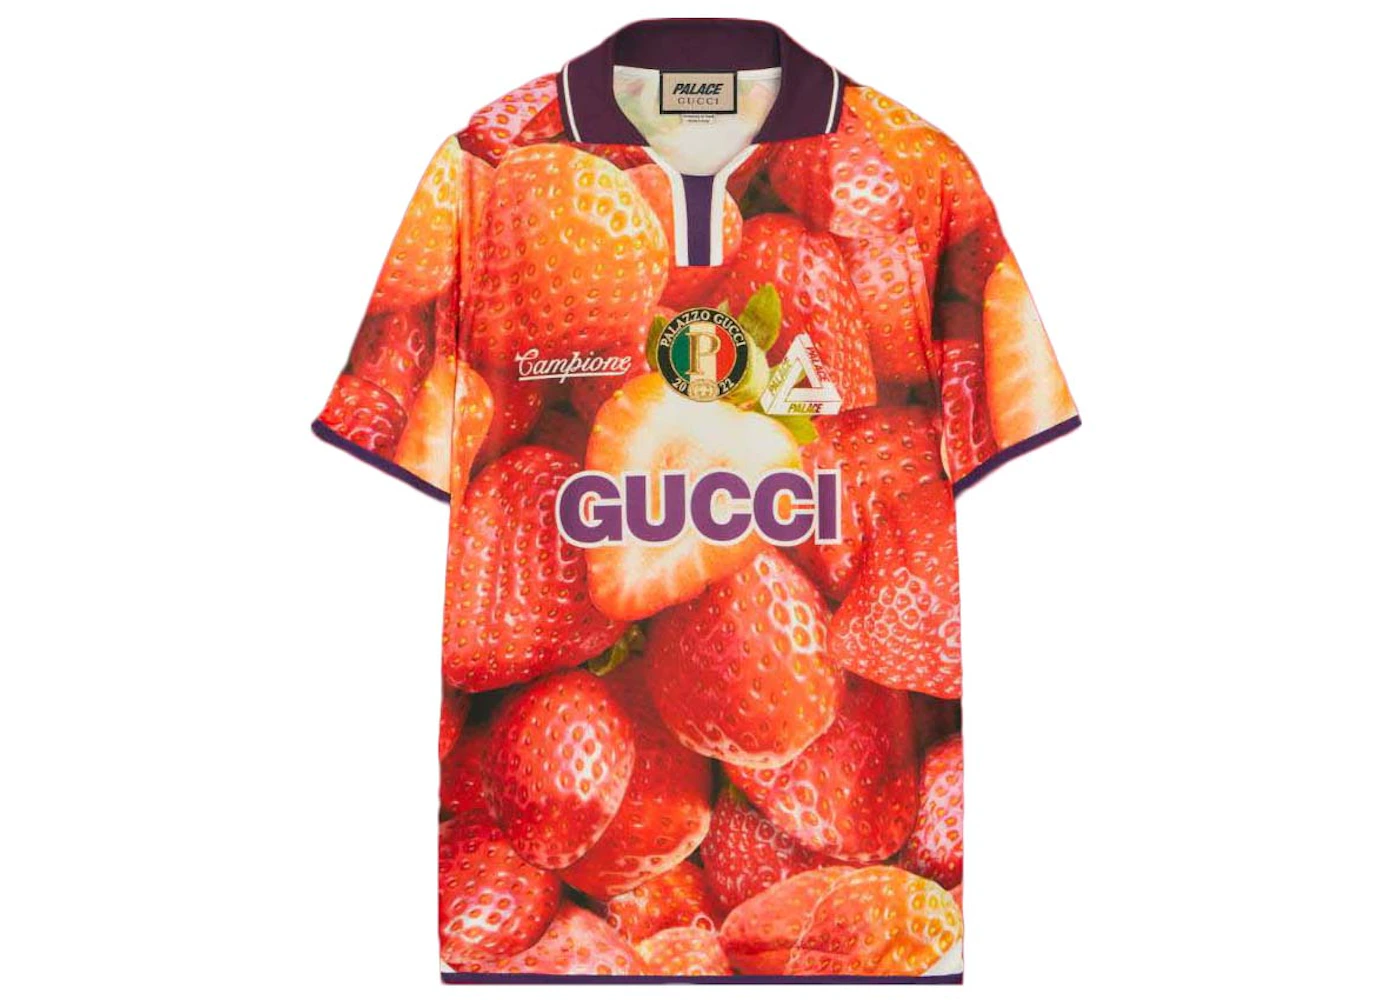 Palace x Gucci Strawberry Print Technical Jersey Football T-Shirt Red